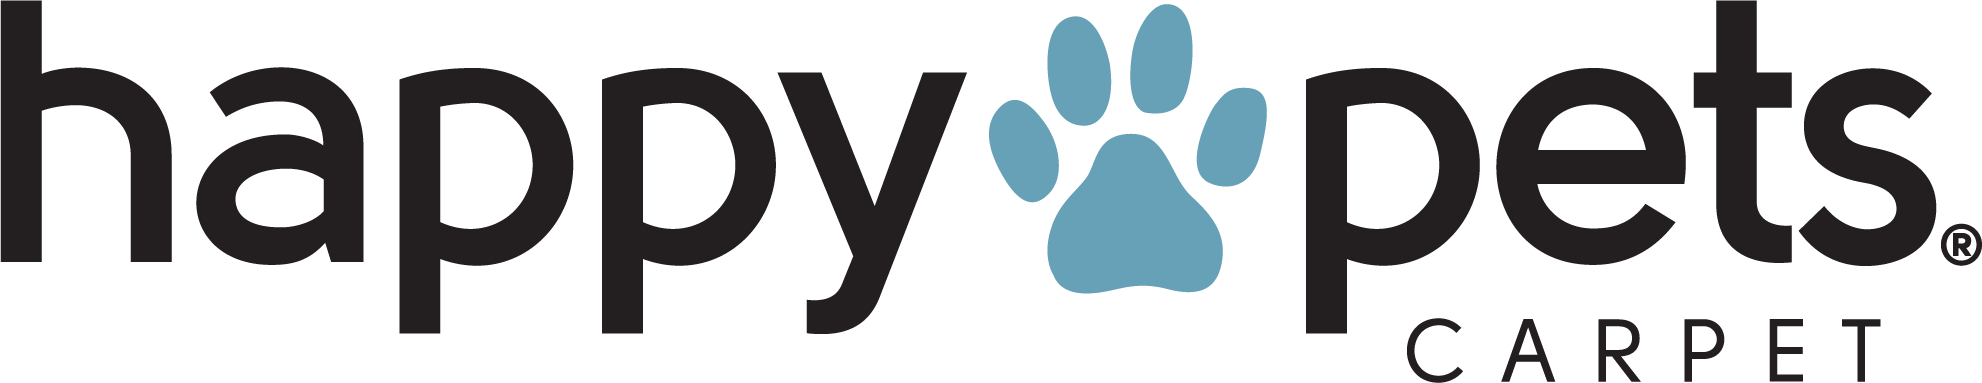 Pet Performance Happy Pets Logo | Lynch Carpet & Flooring